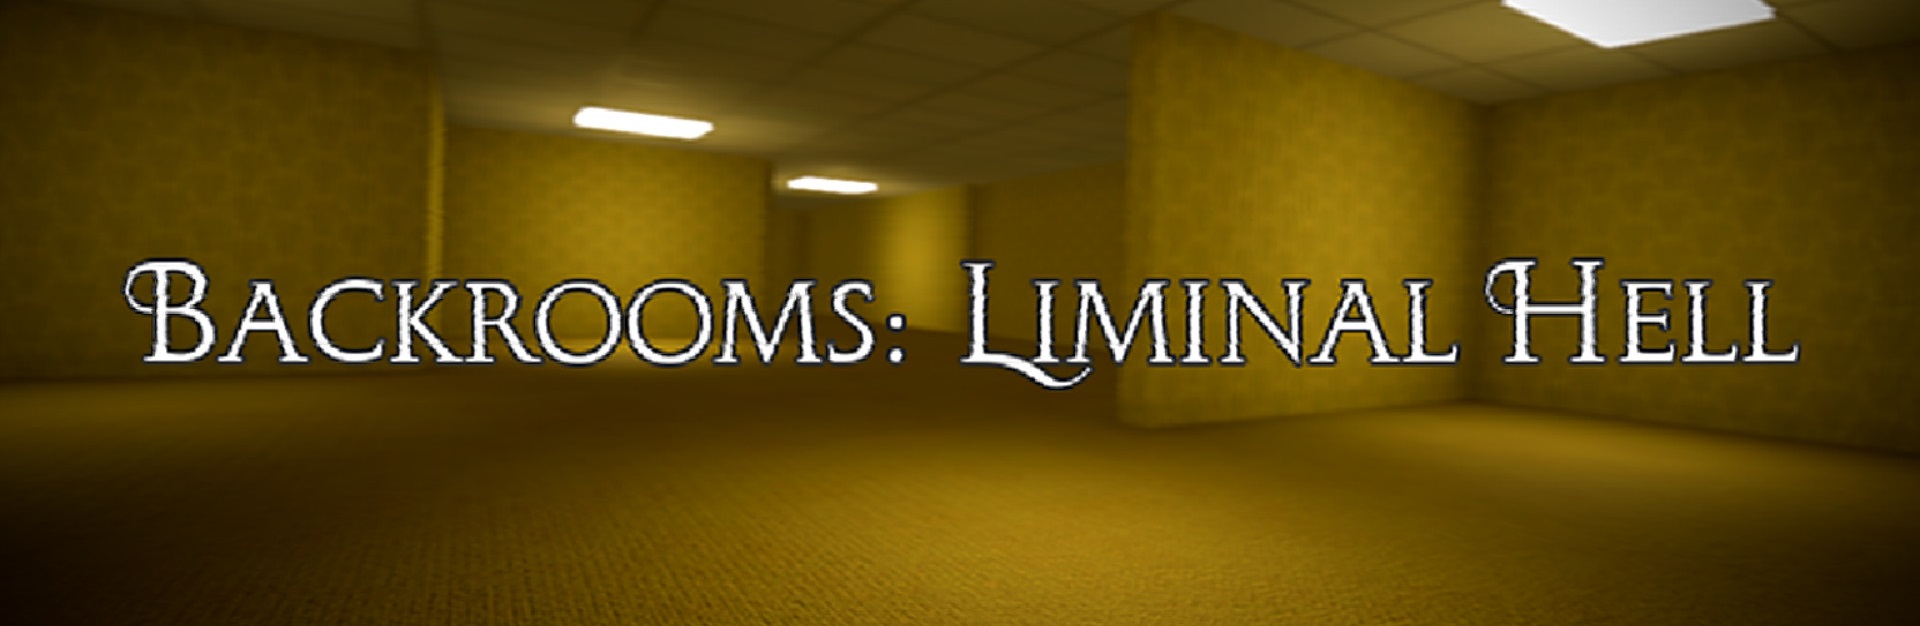 Backrooms: Liminal Hell